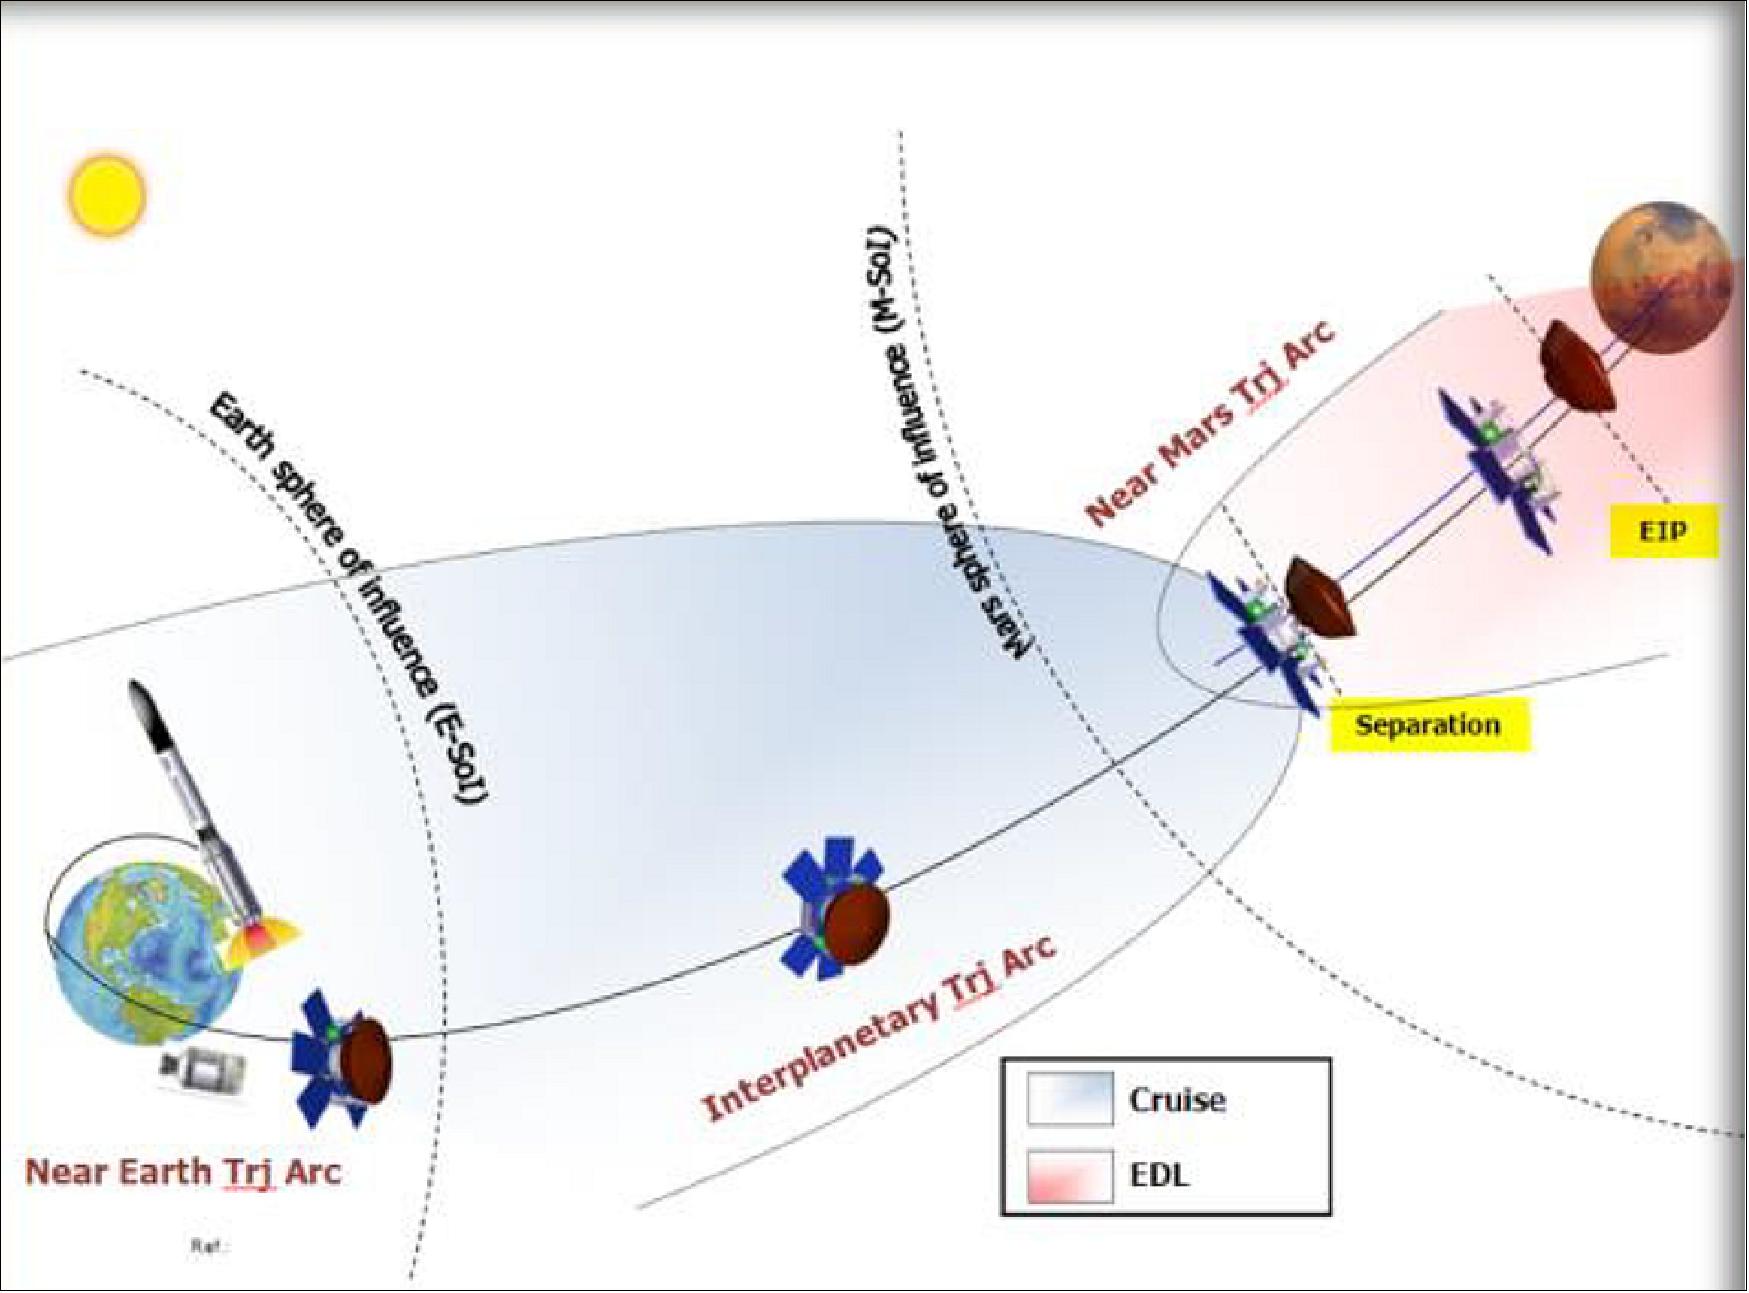 Figure 1: Illustration of the interplanetary transfer of the ExoMars 2020 mission (image credit: ExoMars collaboration)